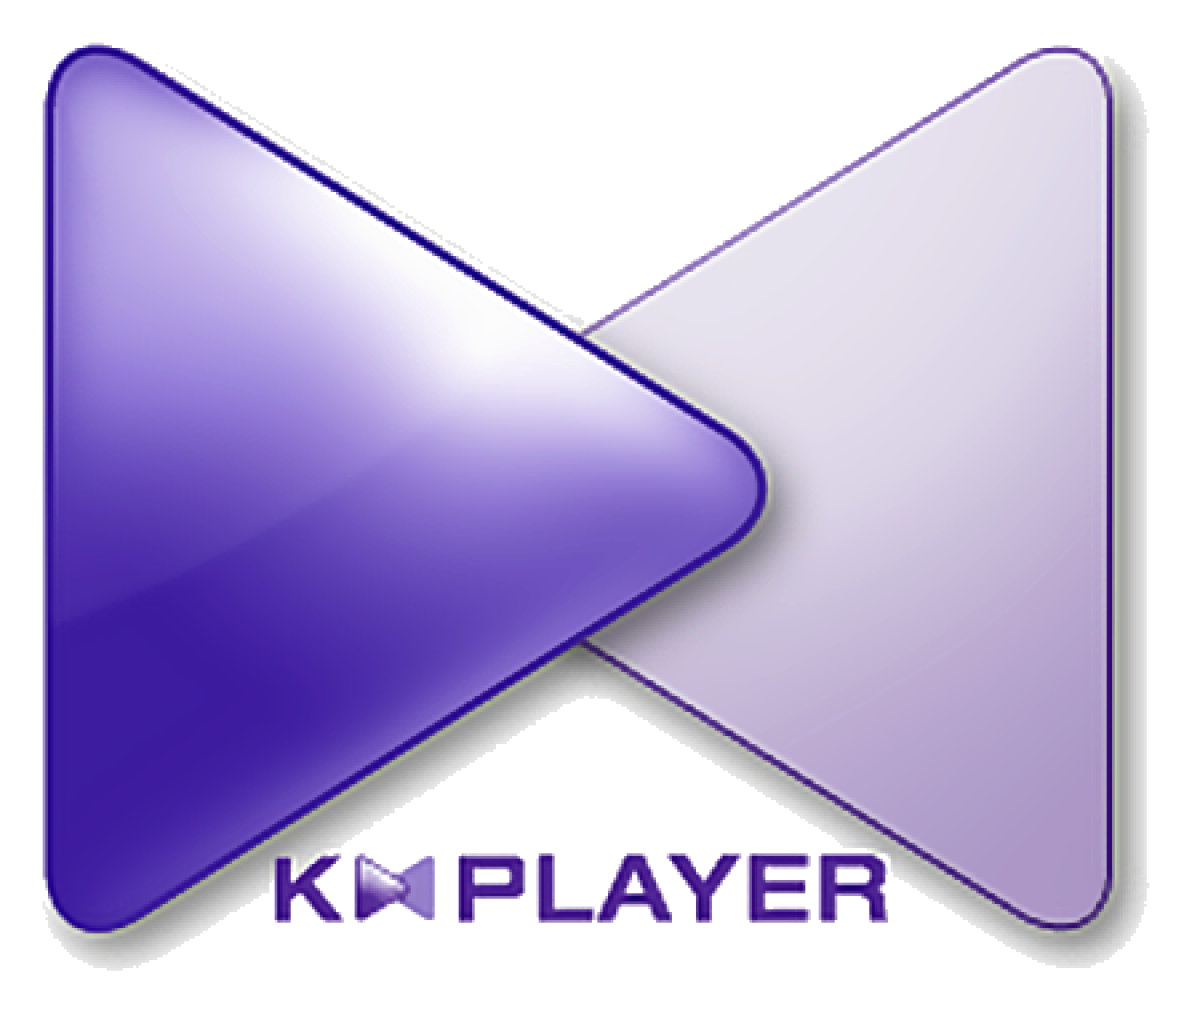 KM-Player